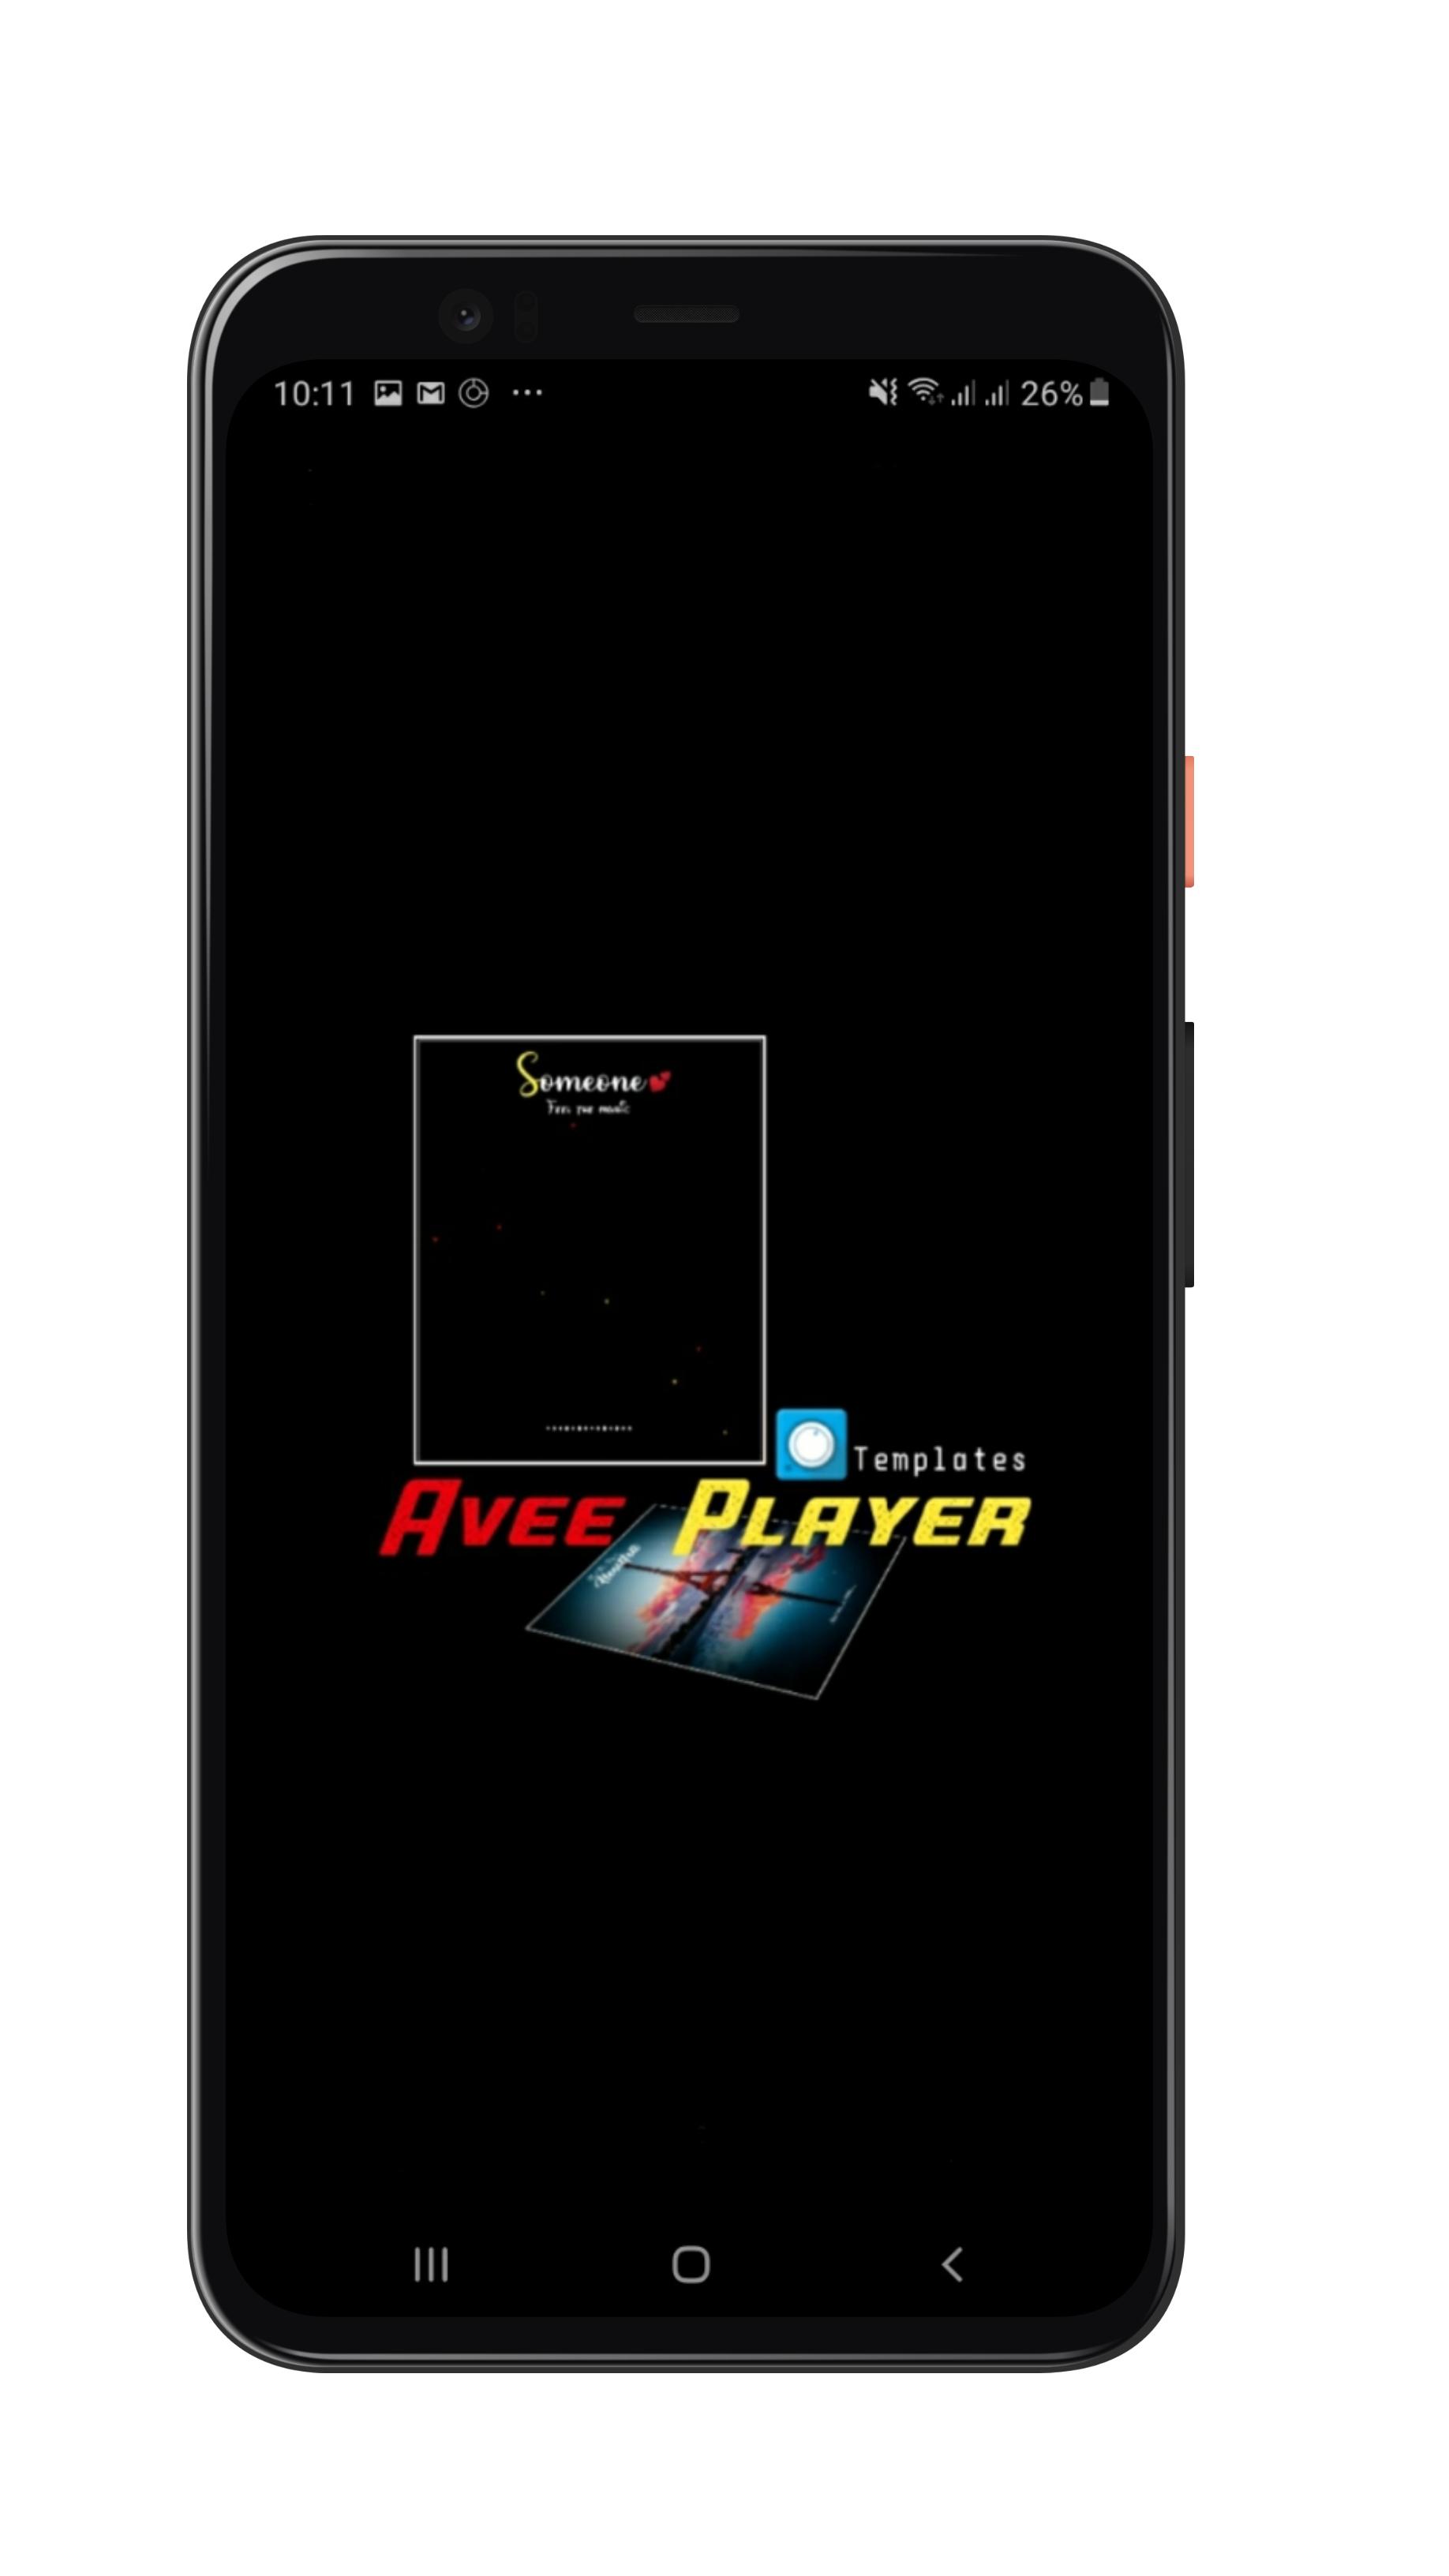 avee-player-templates-2020-free-download-apk-untuk-unduhan-android